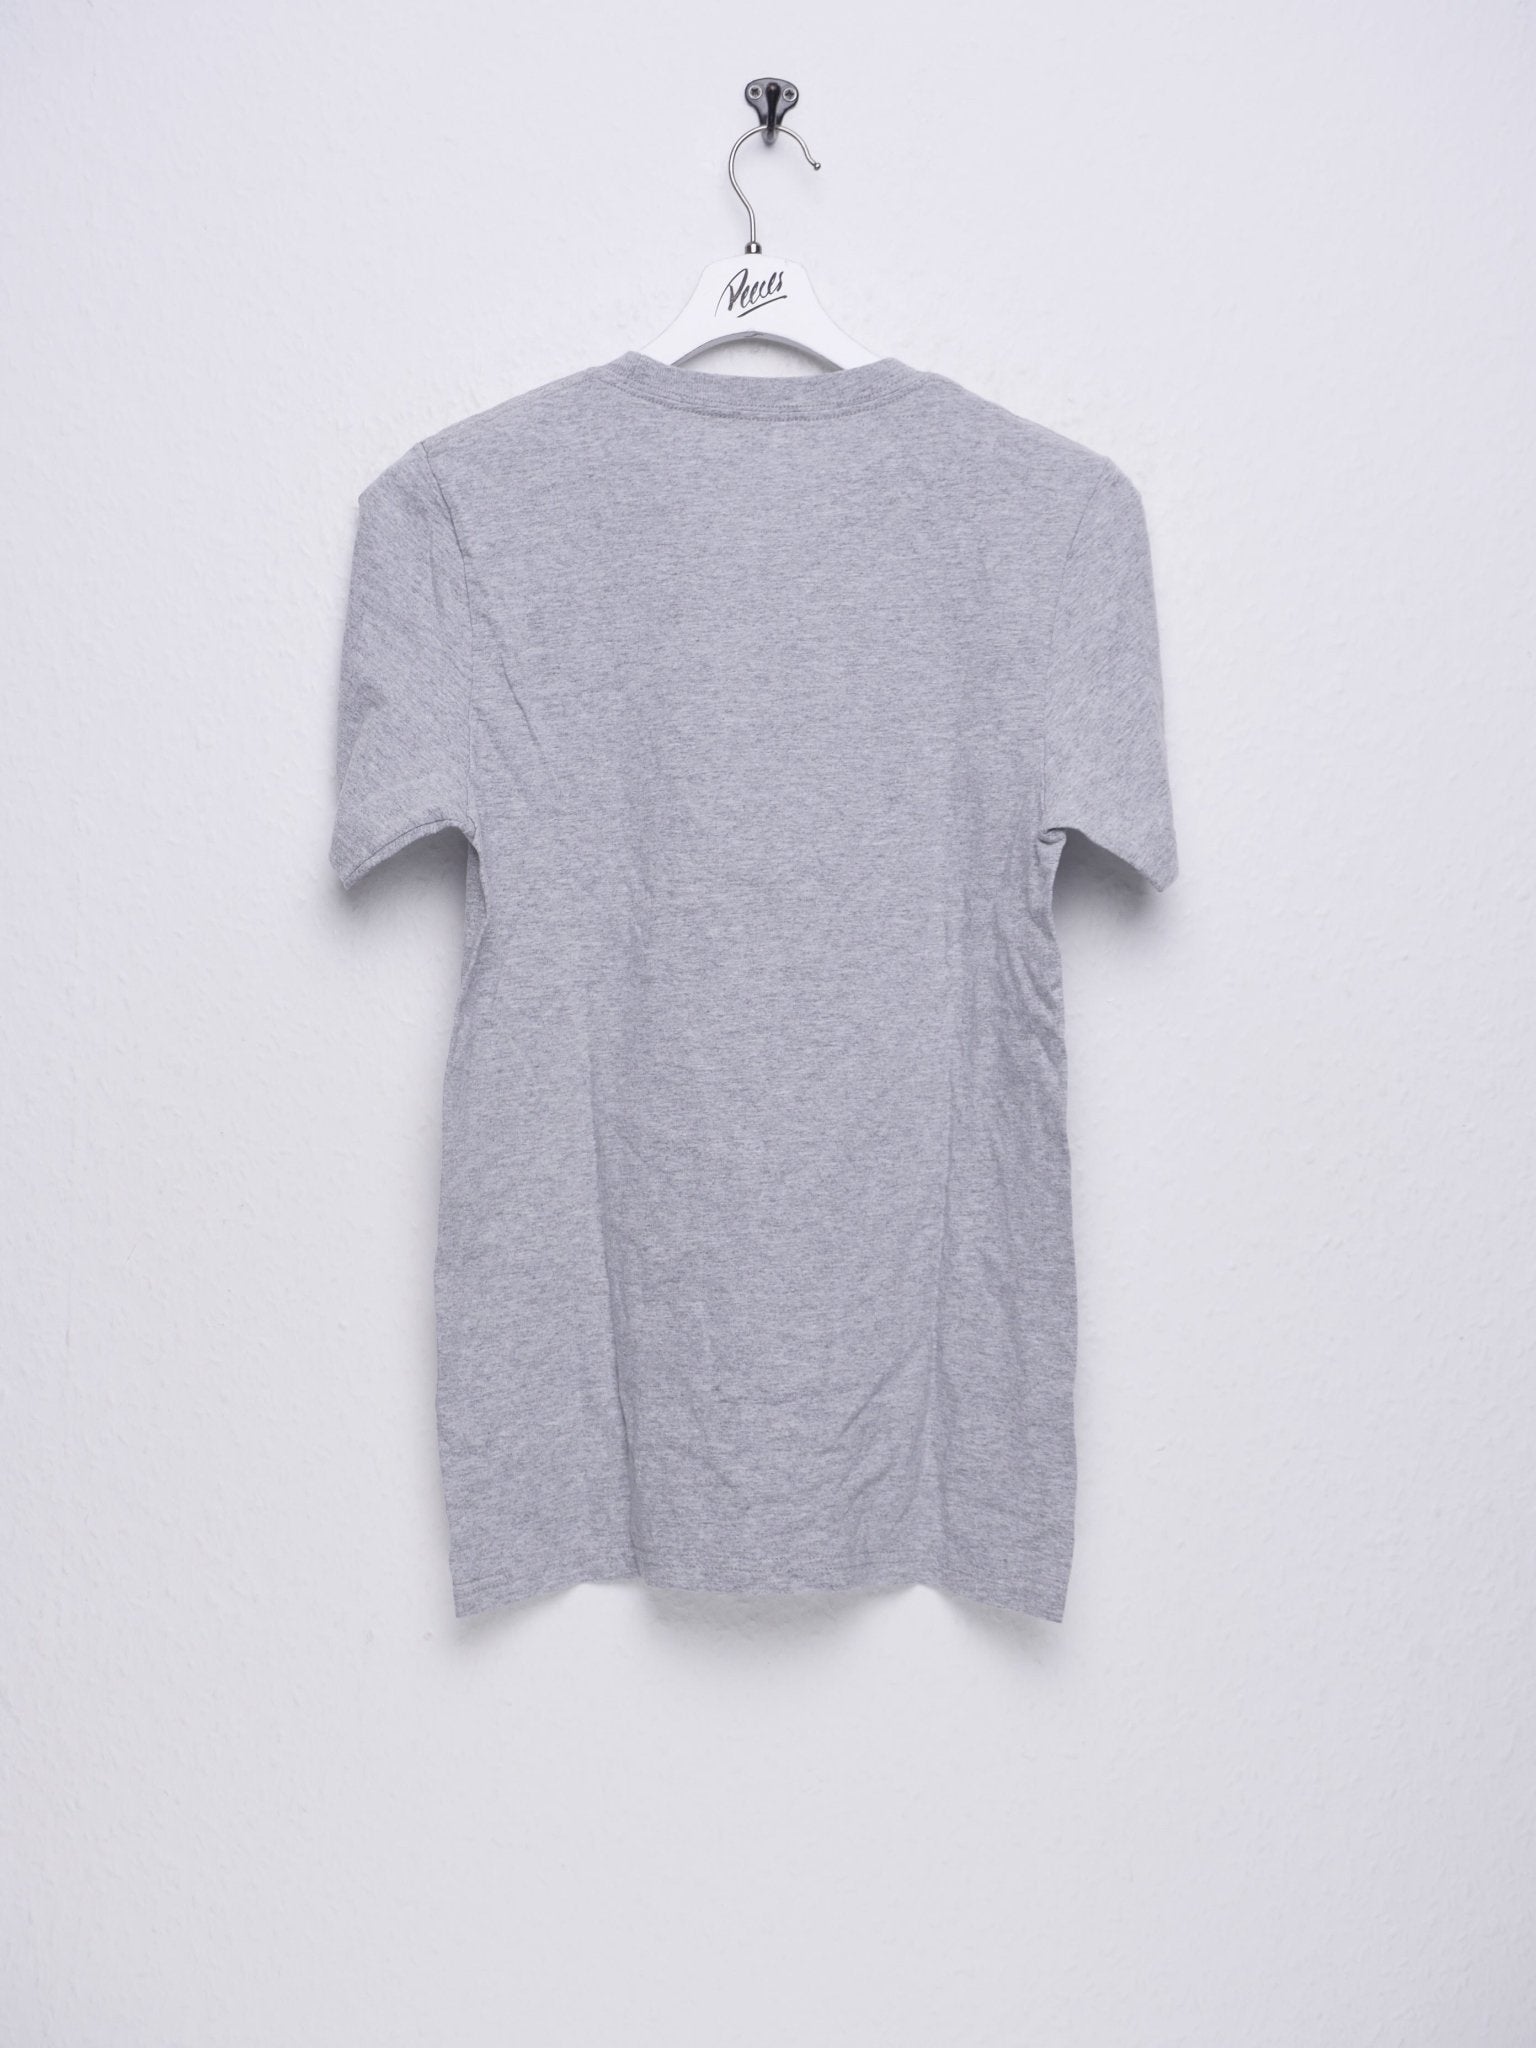 Adidas printed Logo grey Shirt - Peeces